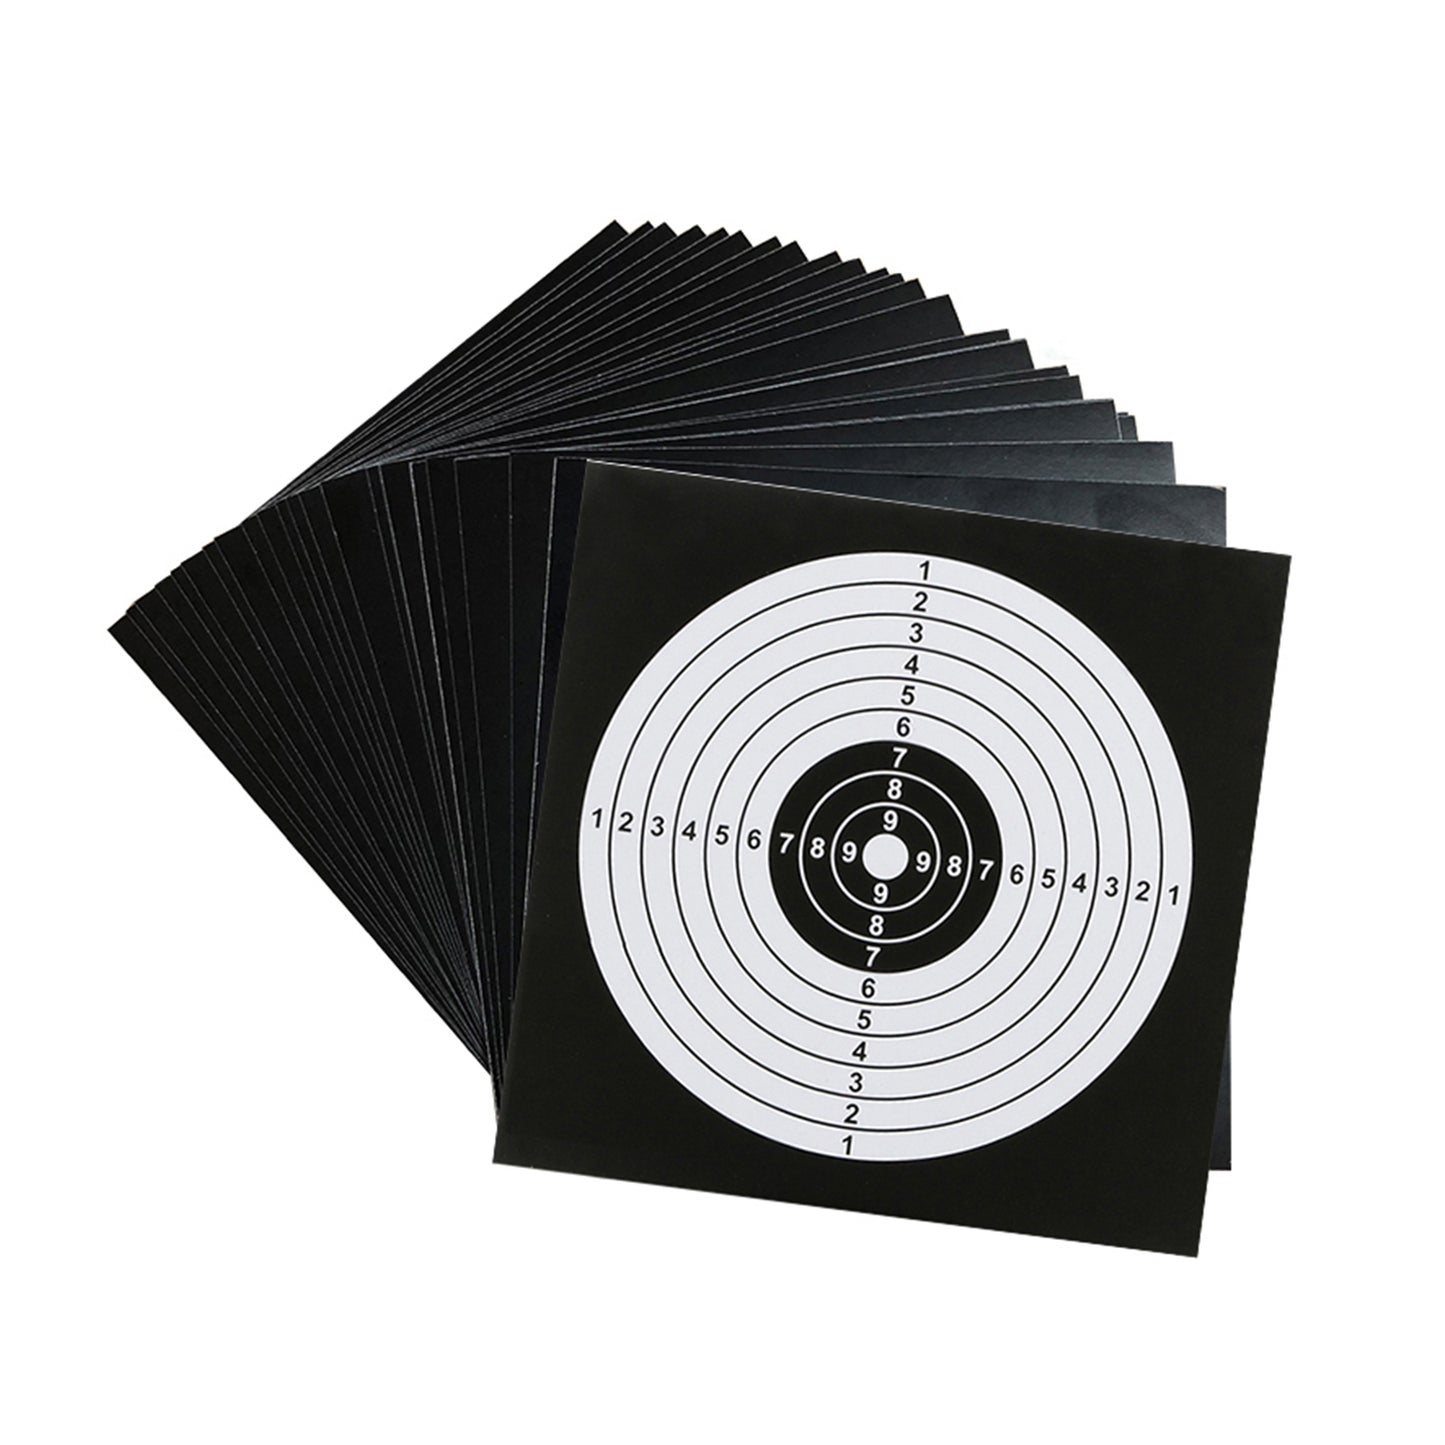 Atflbox 5.5 Inch BB Gun Target Papers for Pellet Trap Shooting Target Holder, Pack of 100(Black)